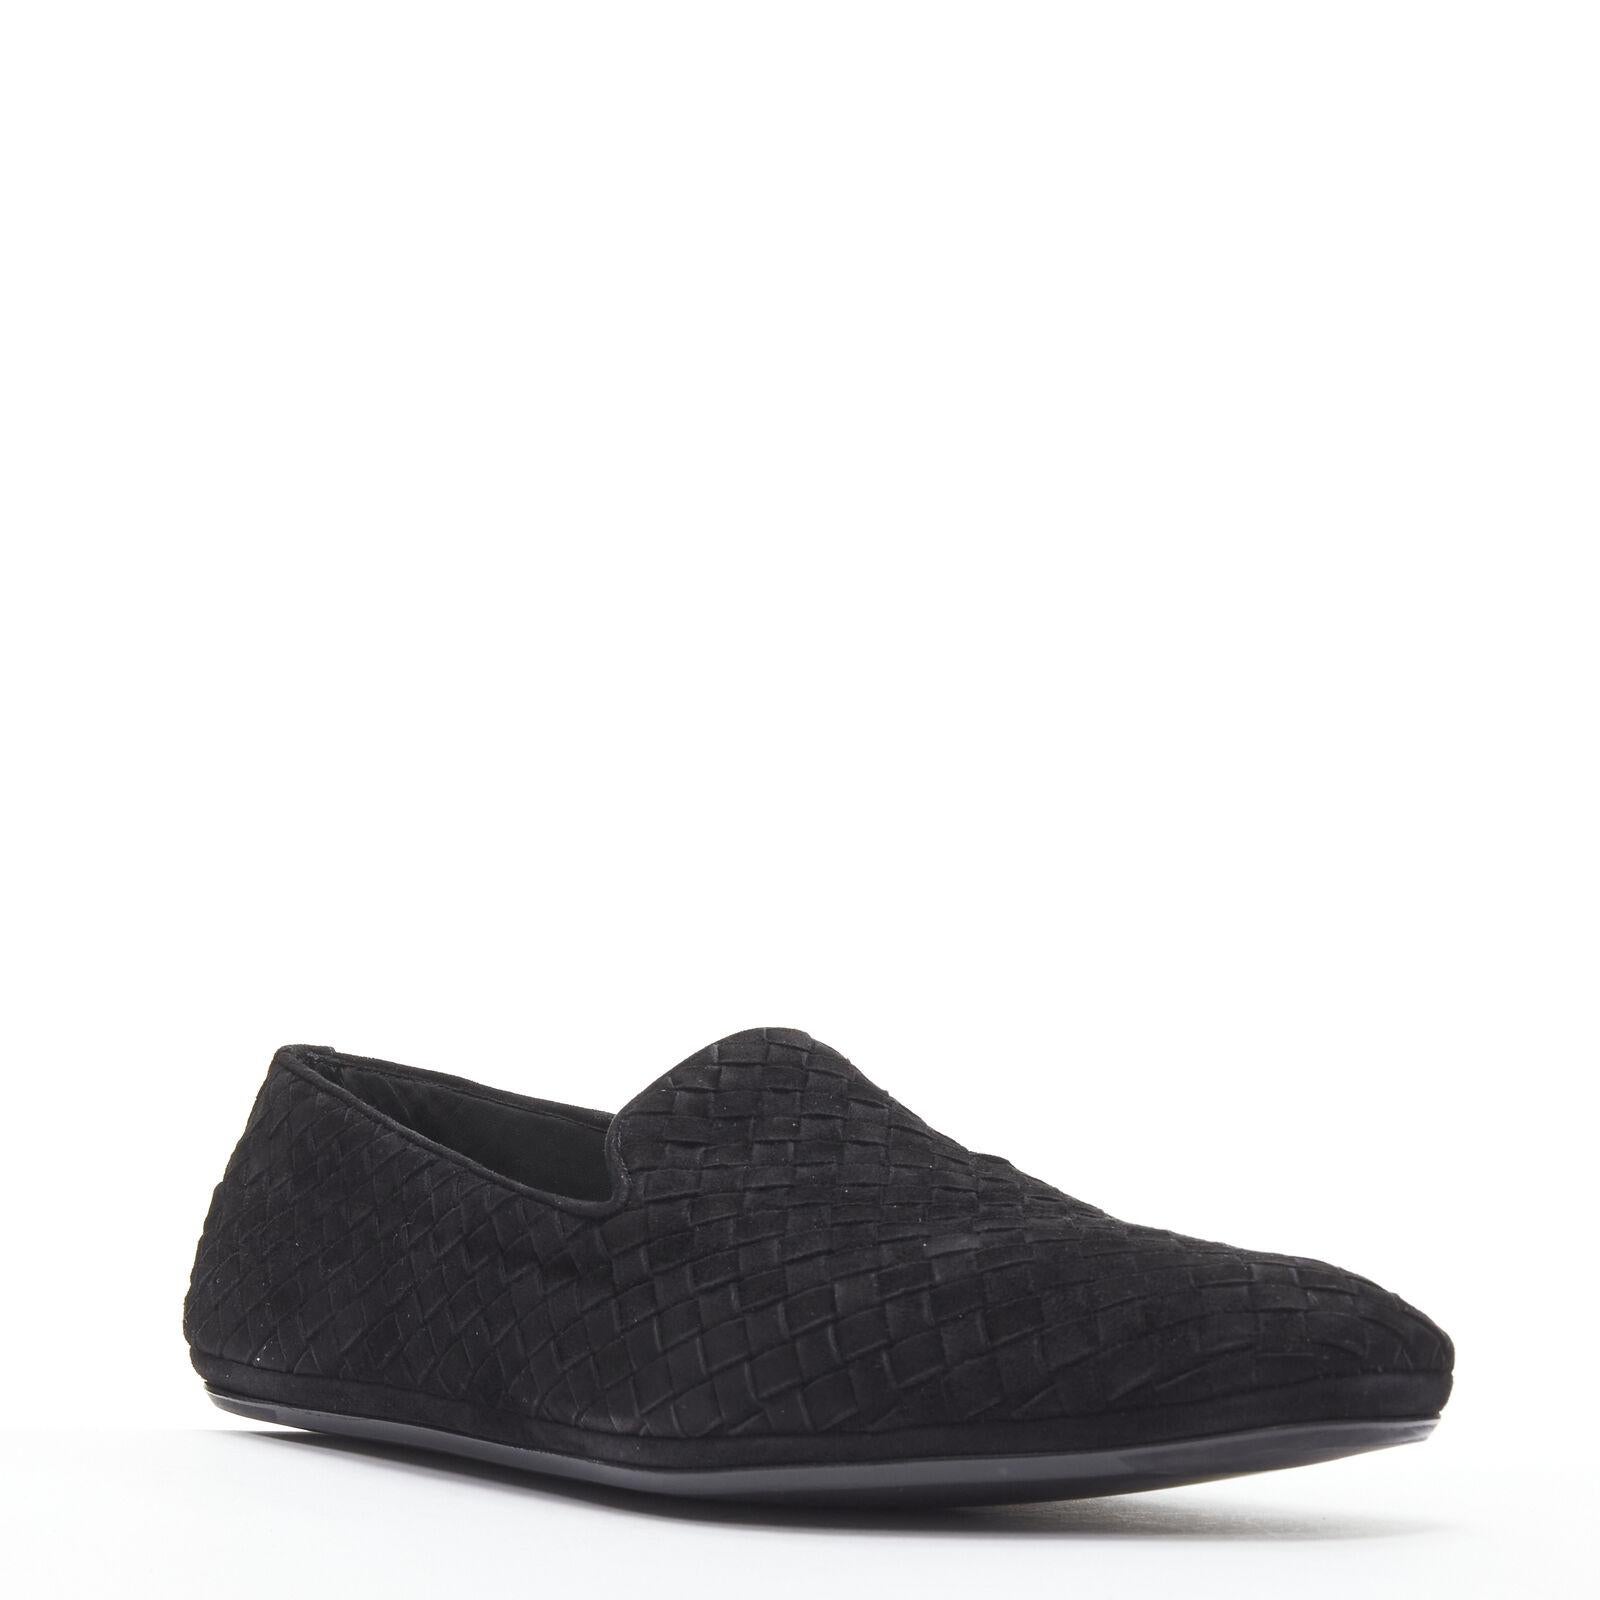 Black new BOTTEGA VENETA Intrecciato Luxe suede black woven dress loafer shoes EU42.5